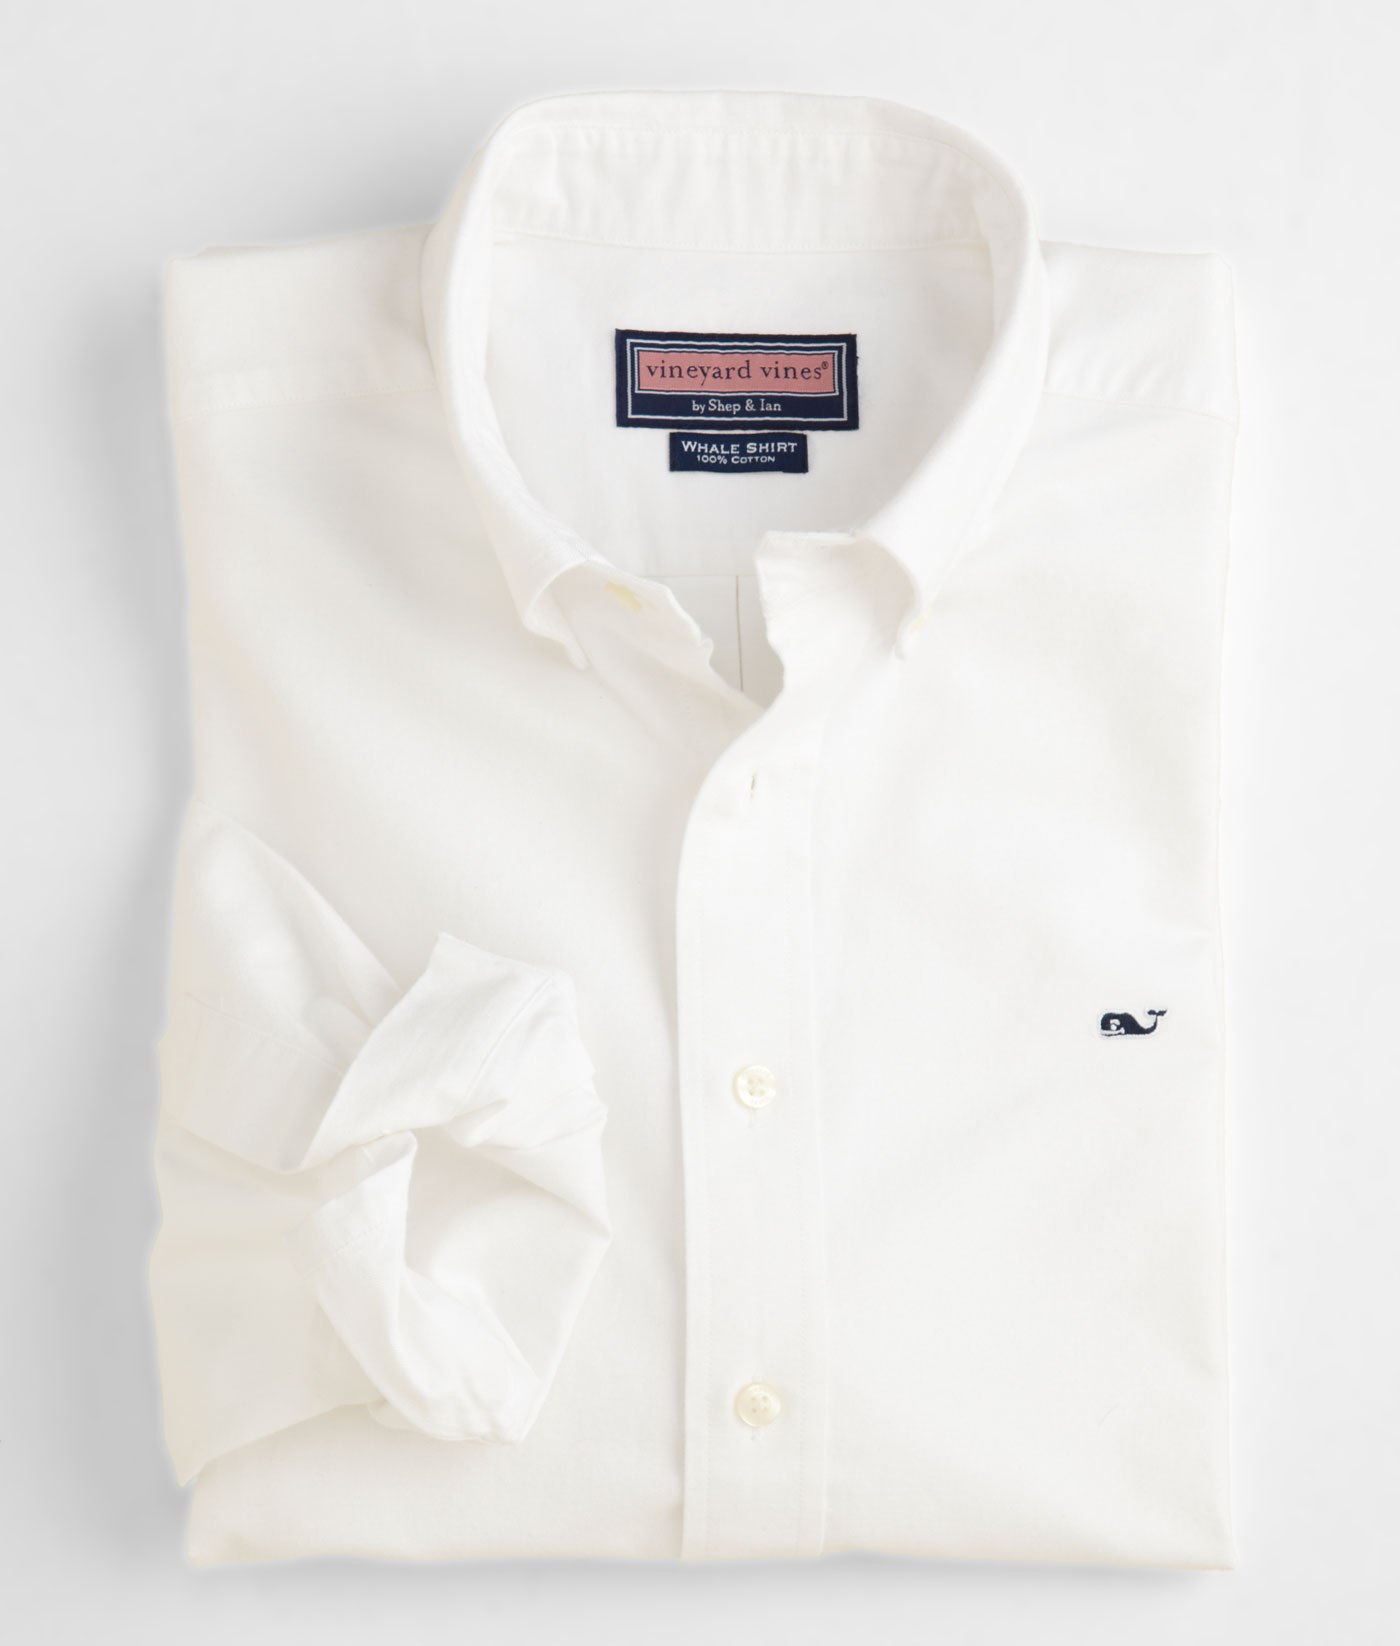 Vineyard Vines Mens Slim Fit Whale Shirt Button Down Dress Shirt Sweetgum Gingham/Allium, X-Large 